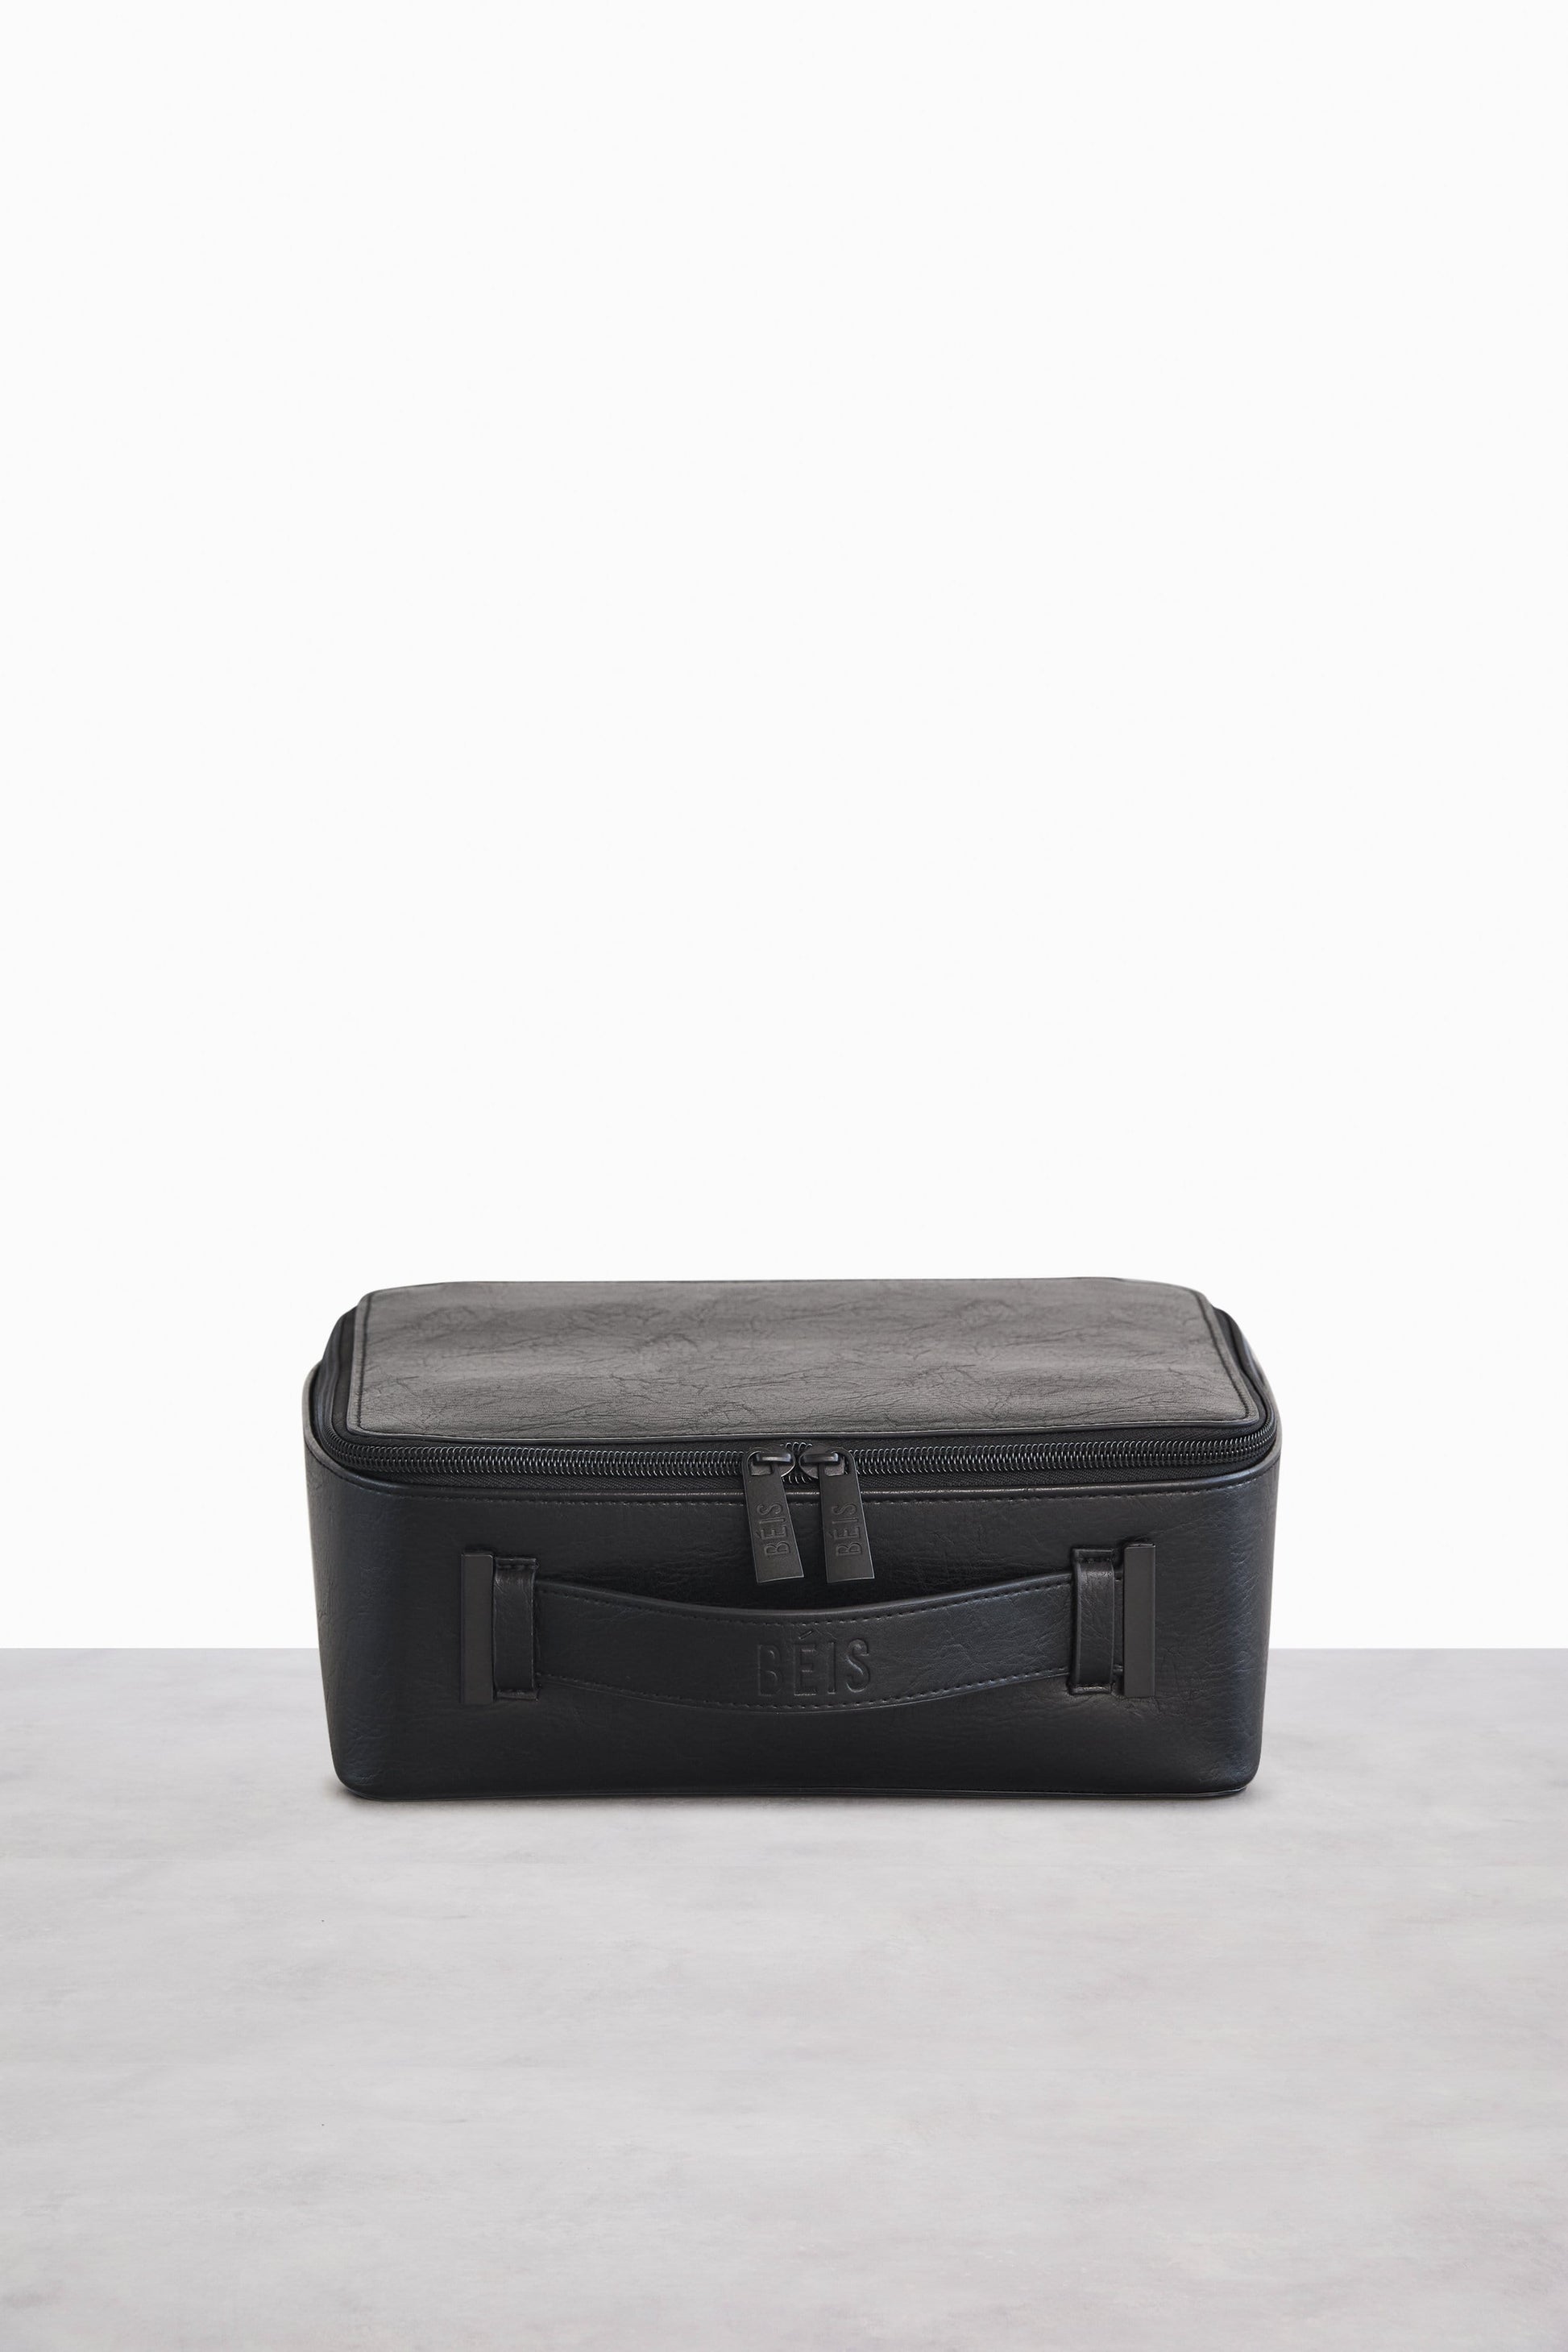 reisenthel case 1 organizer cosmetic bag cosmetic bag Black